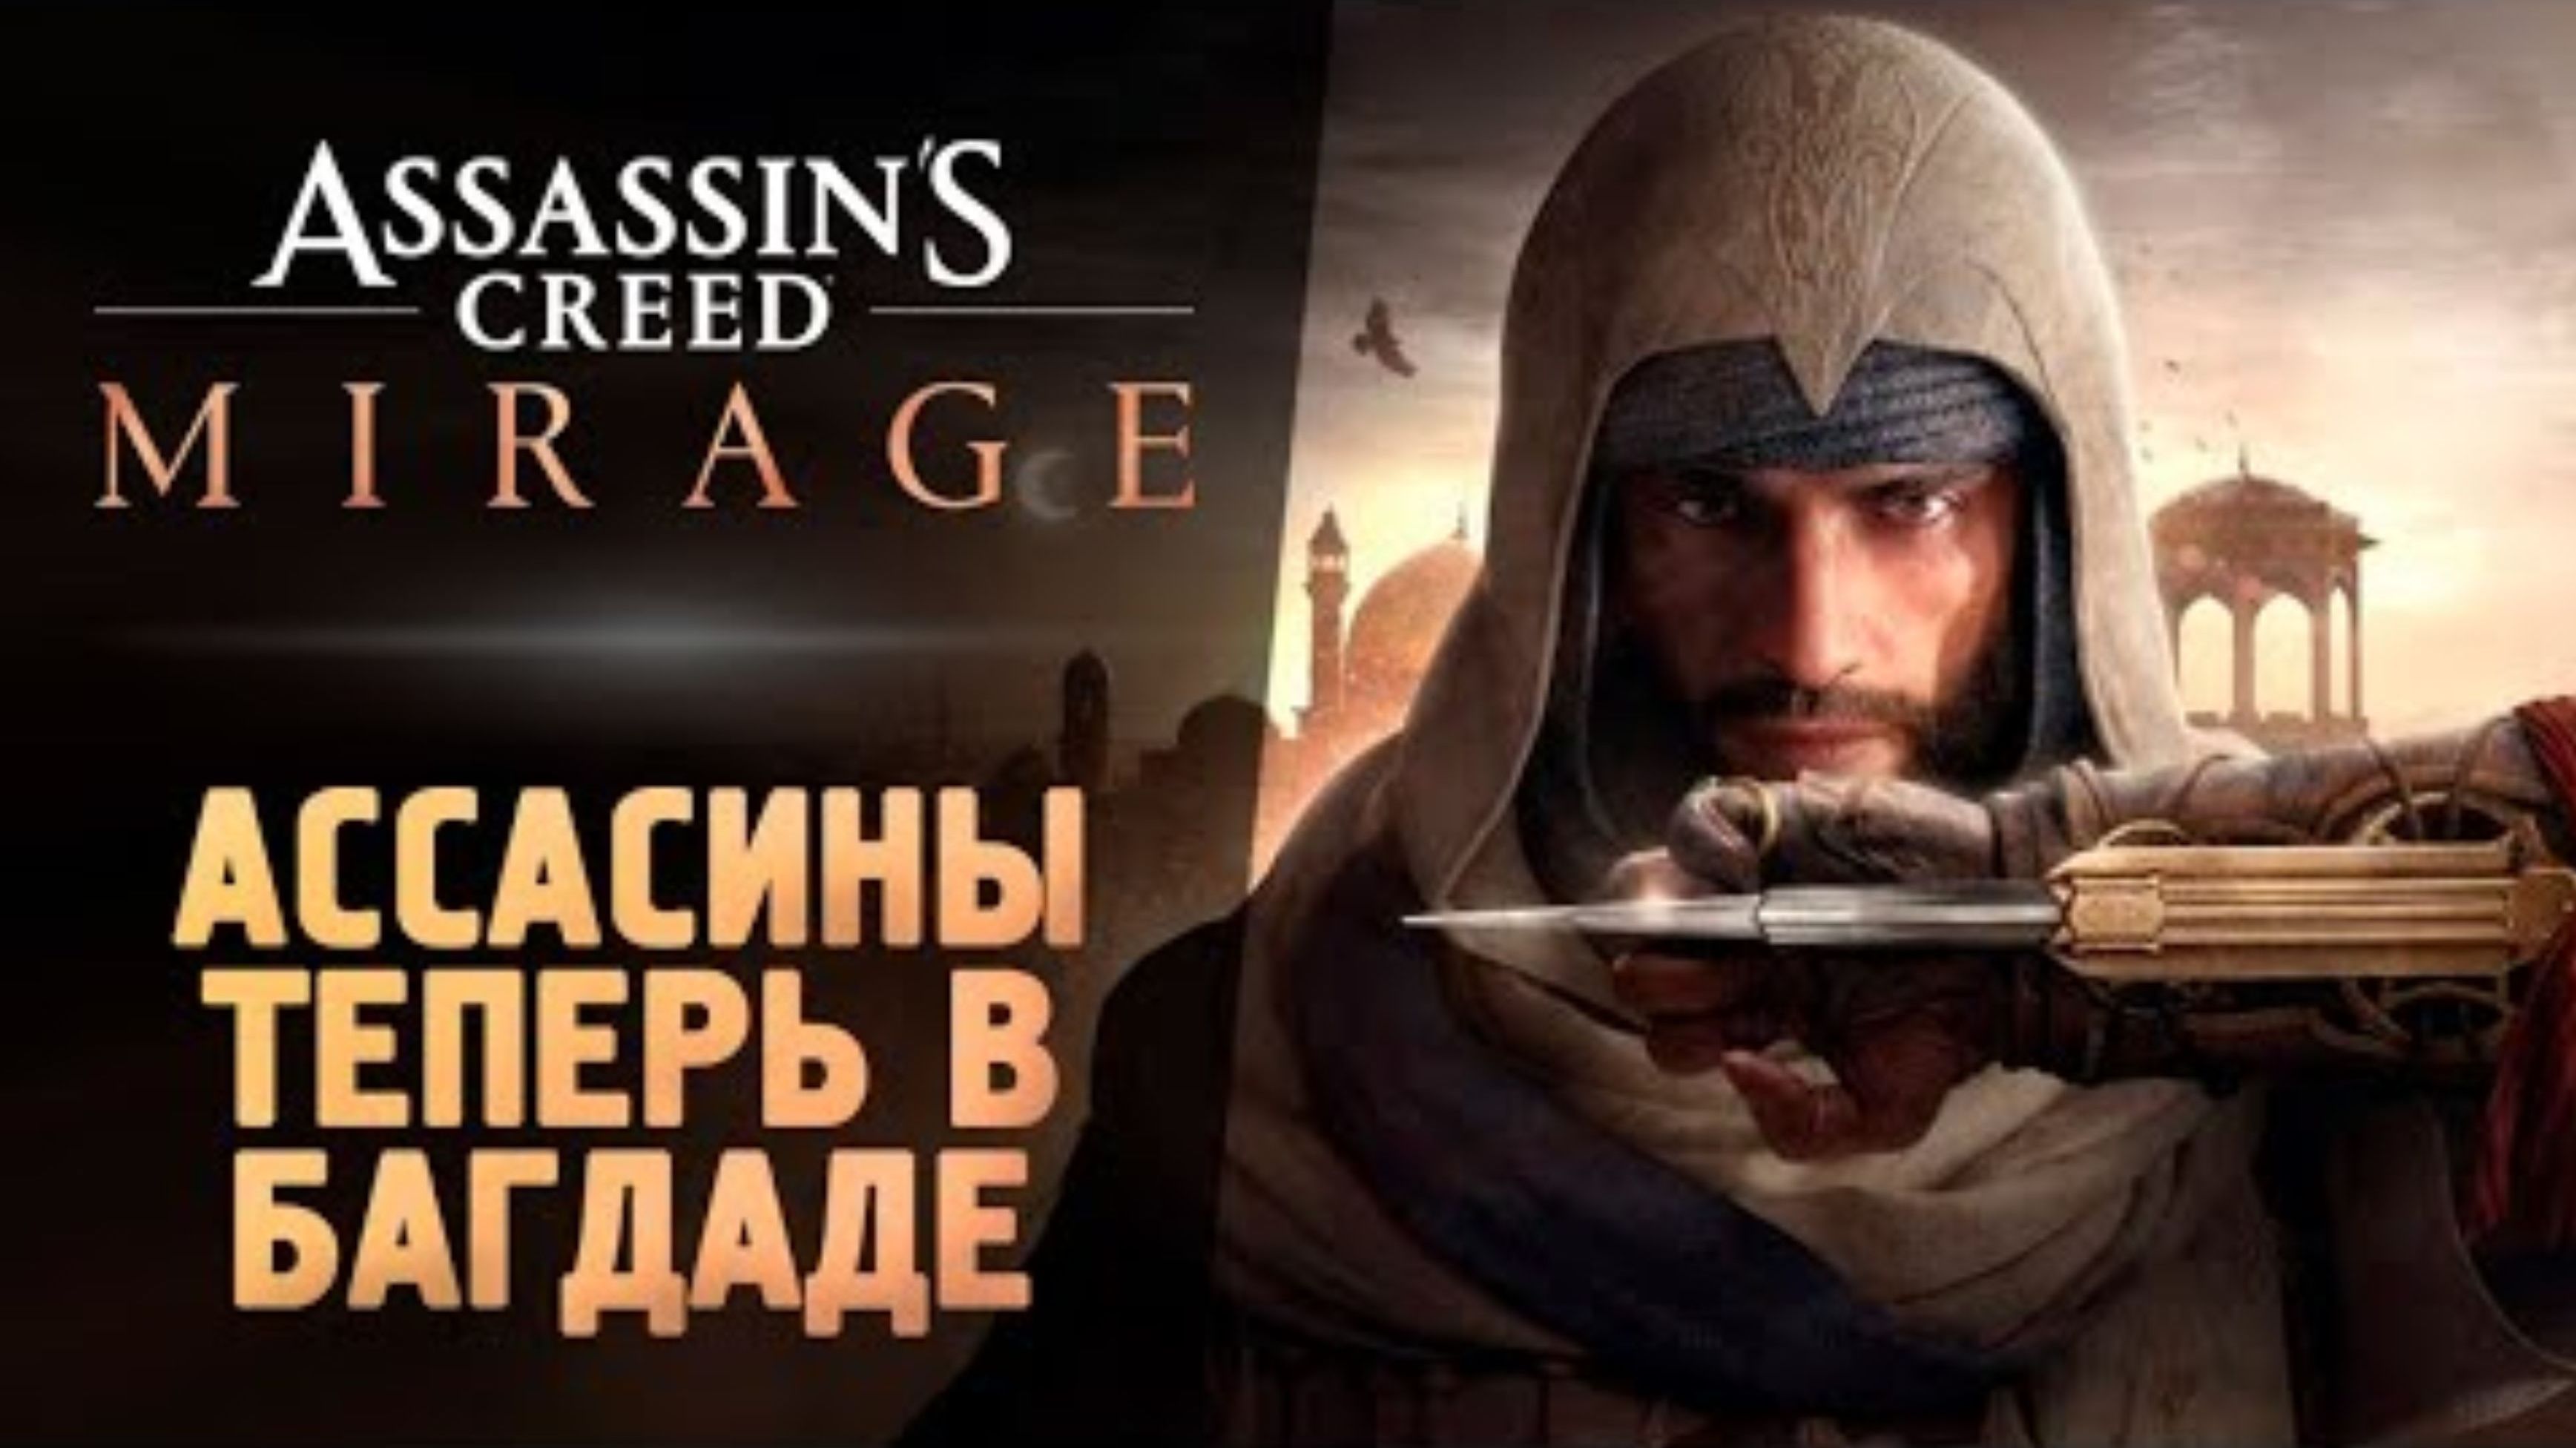 ОН ВЫШЕЛ! АССАСИН В БАГДАДЕ! - Assassin’s Creed Mirage #1